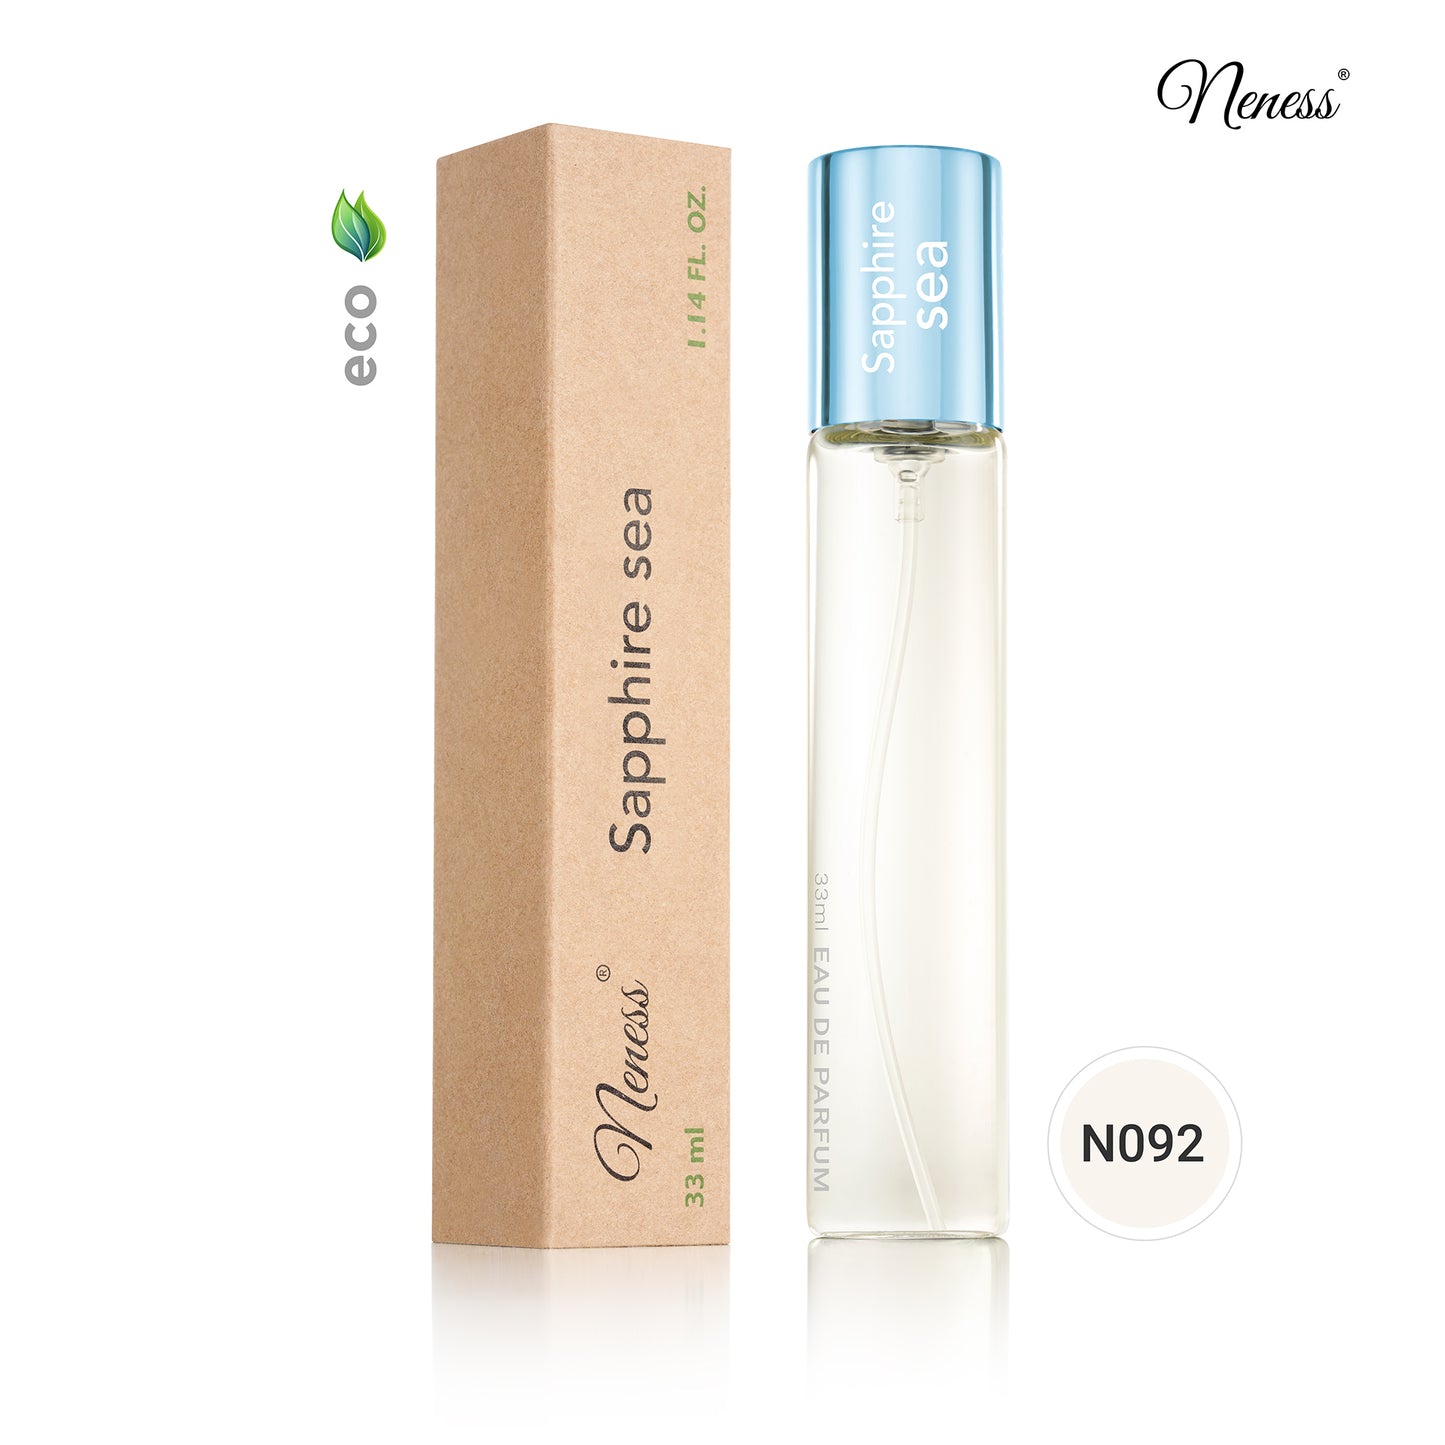 N092. Neness Sapphire Sea - 33 ml - Perfume For Women